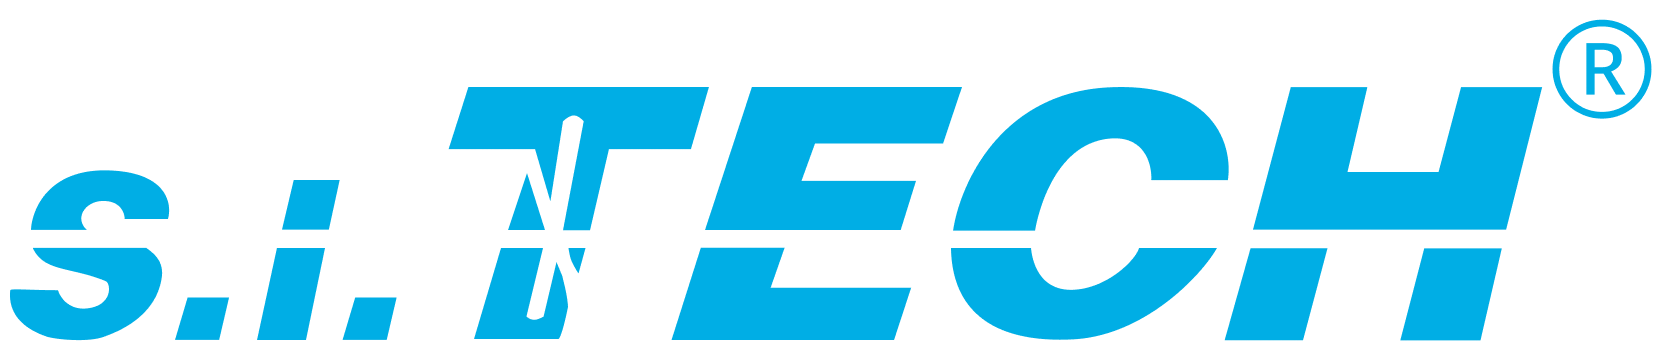 sitech-logo